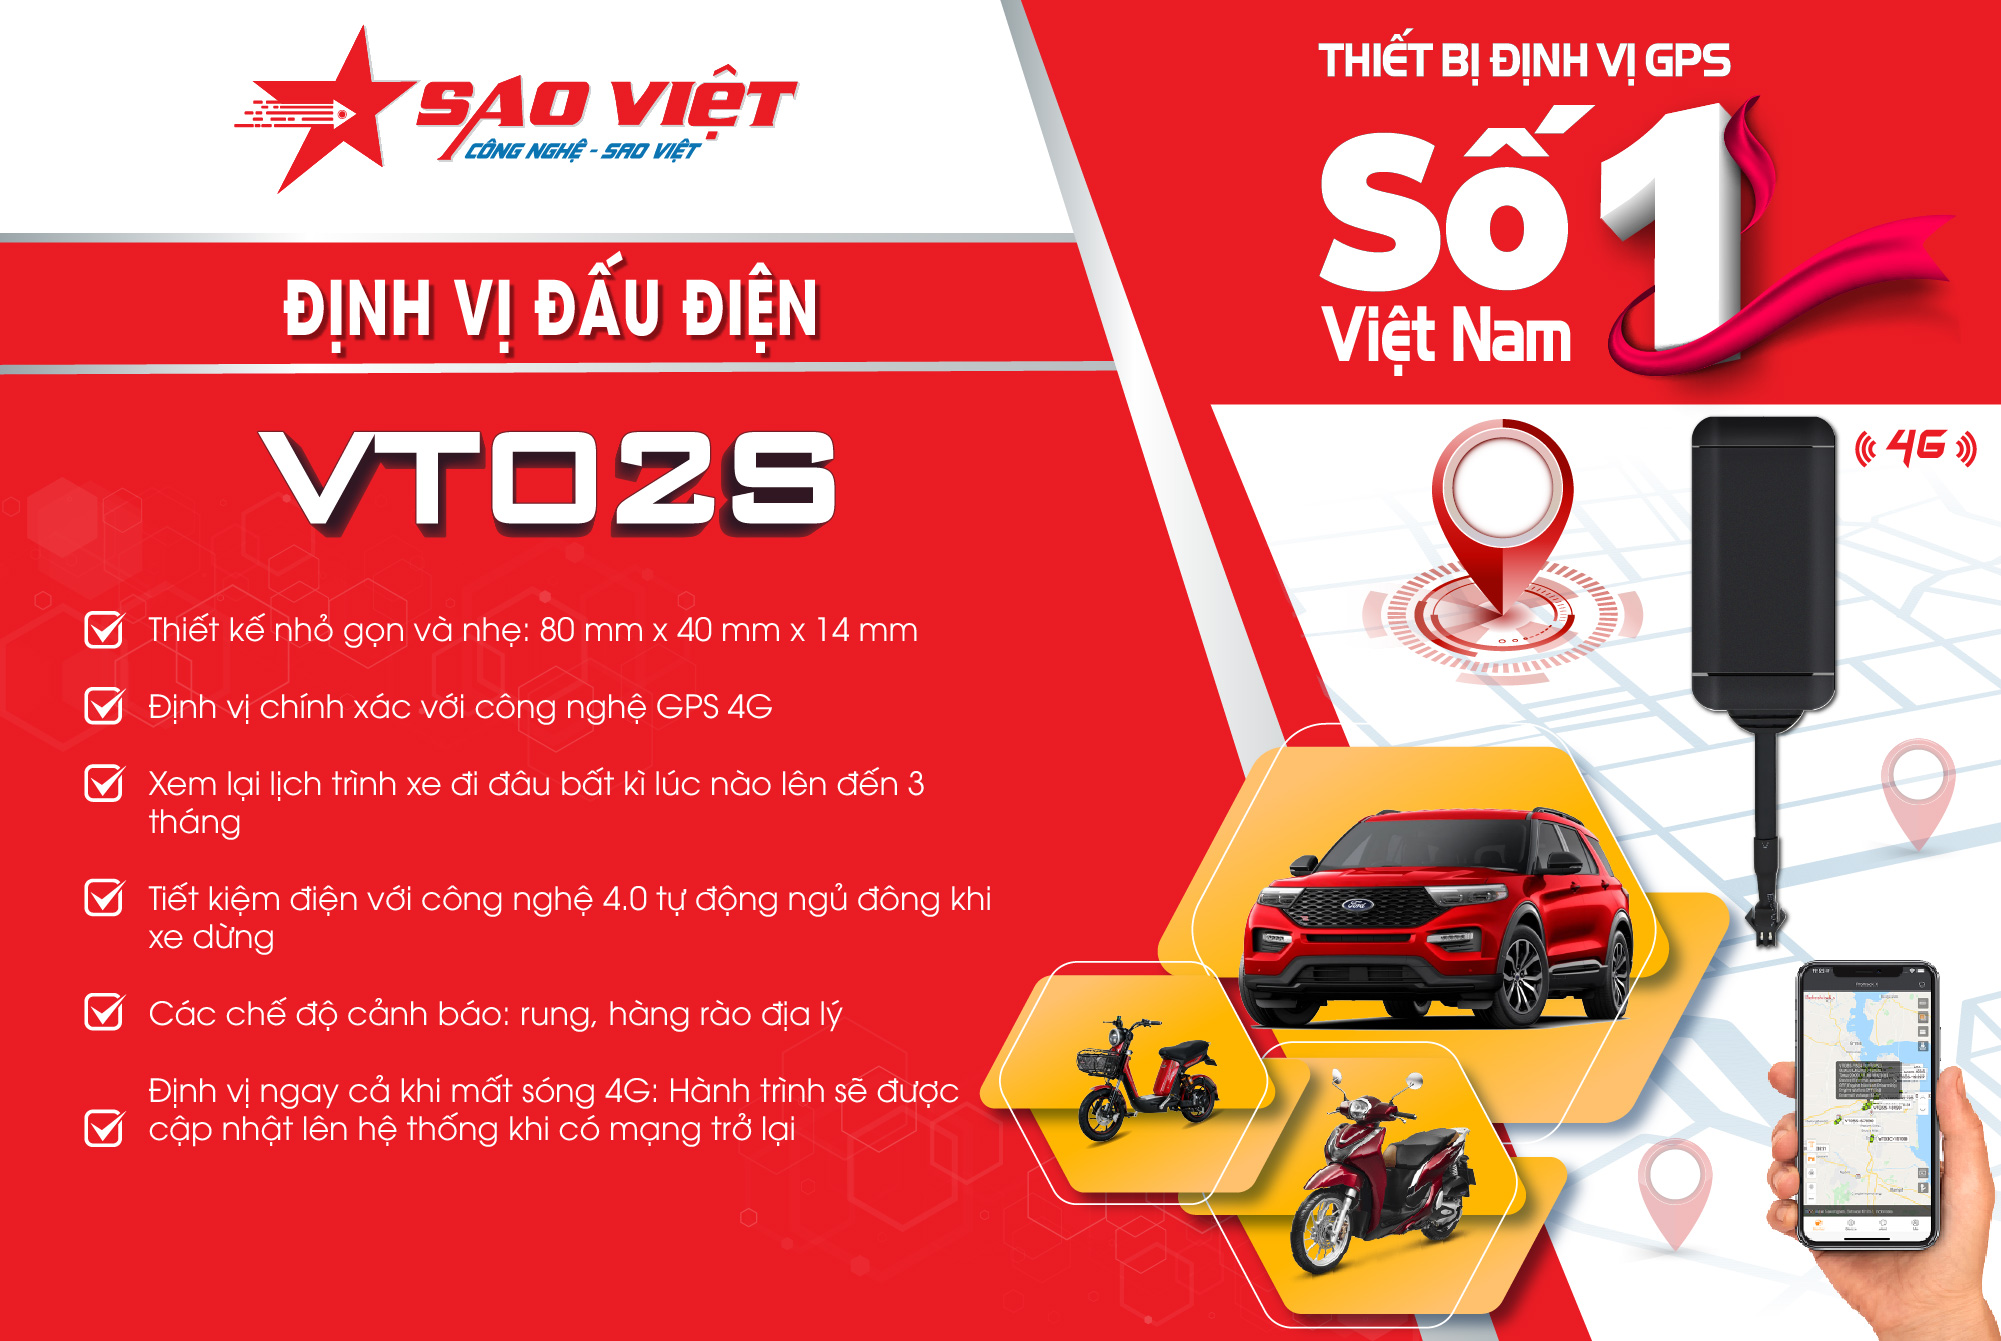 VT02S pro 4G